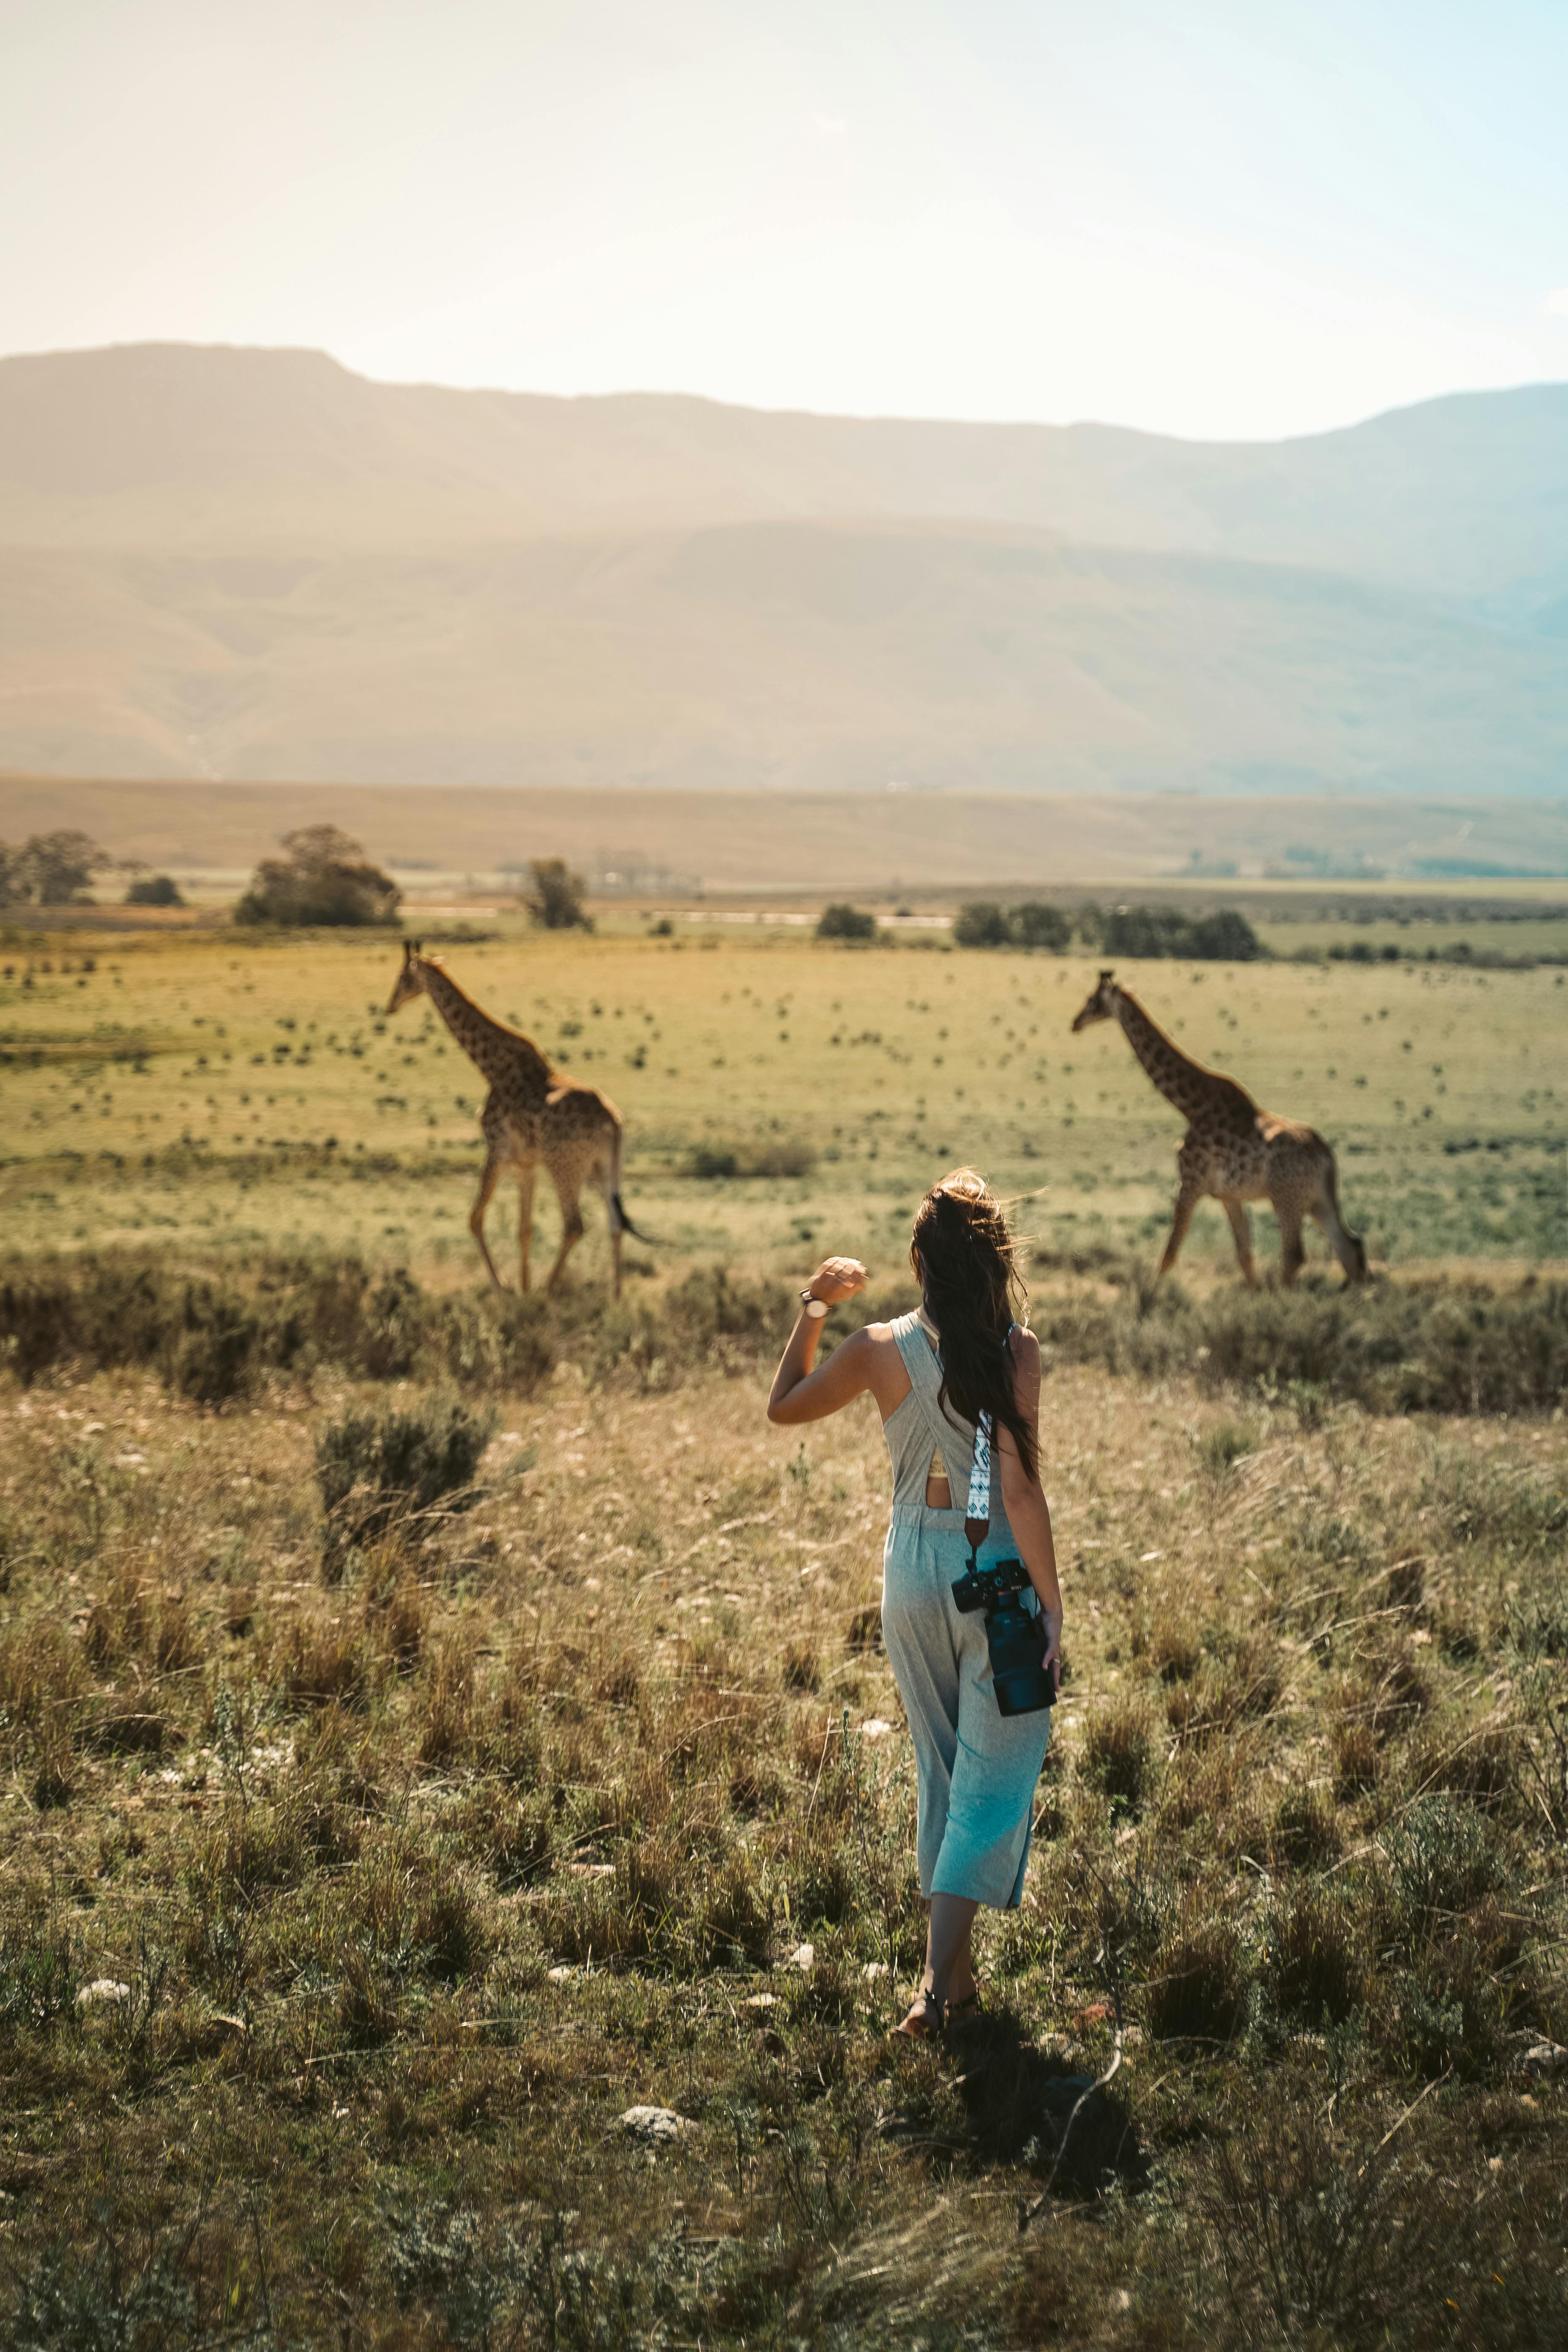 back view of a woman in a grass field near giraffes